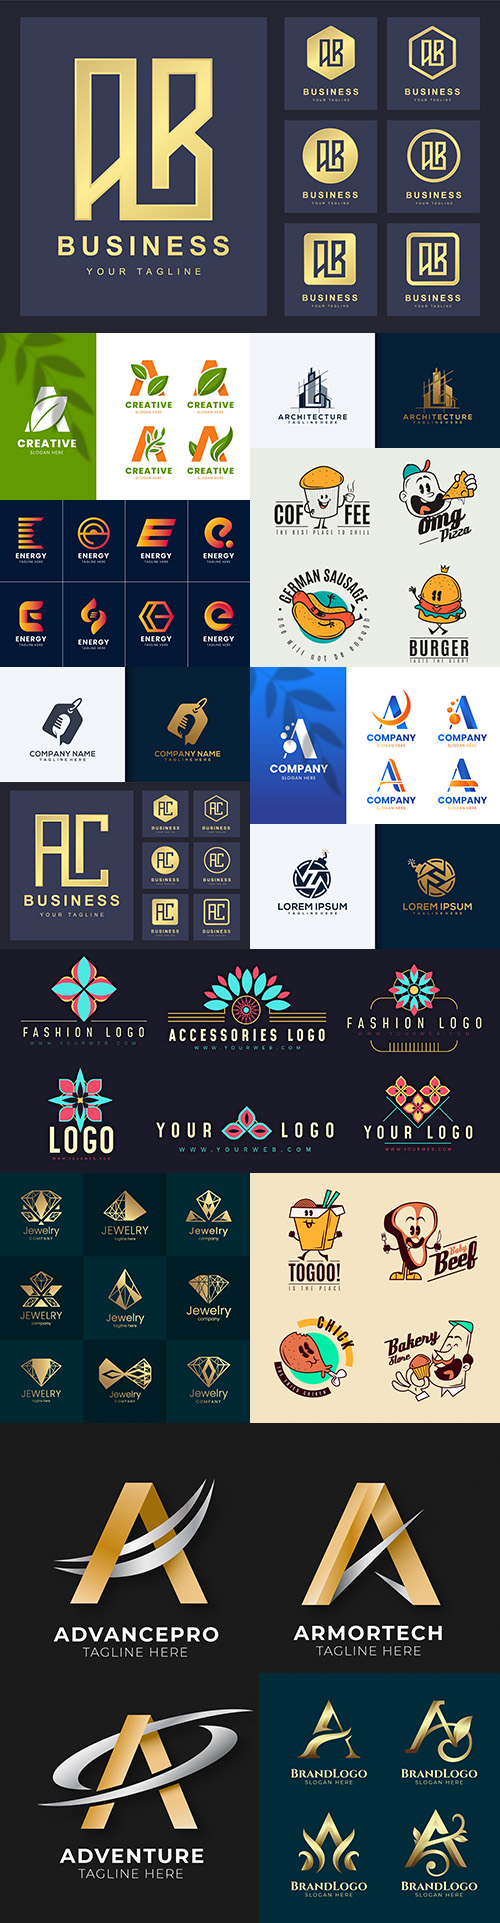 Brand name company business corporate logos design 19